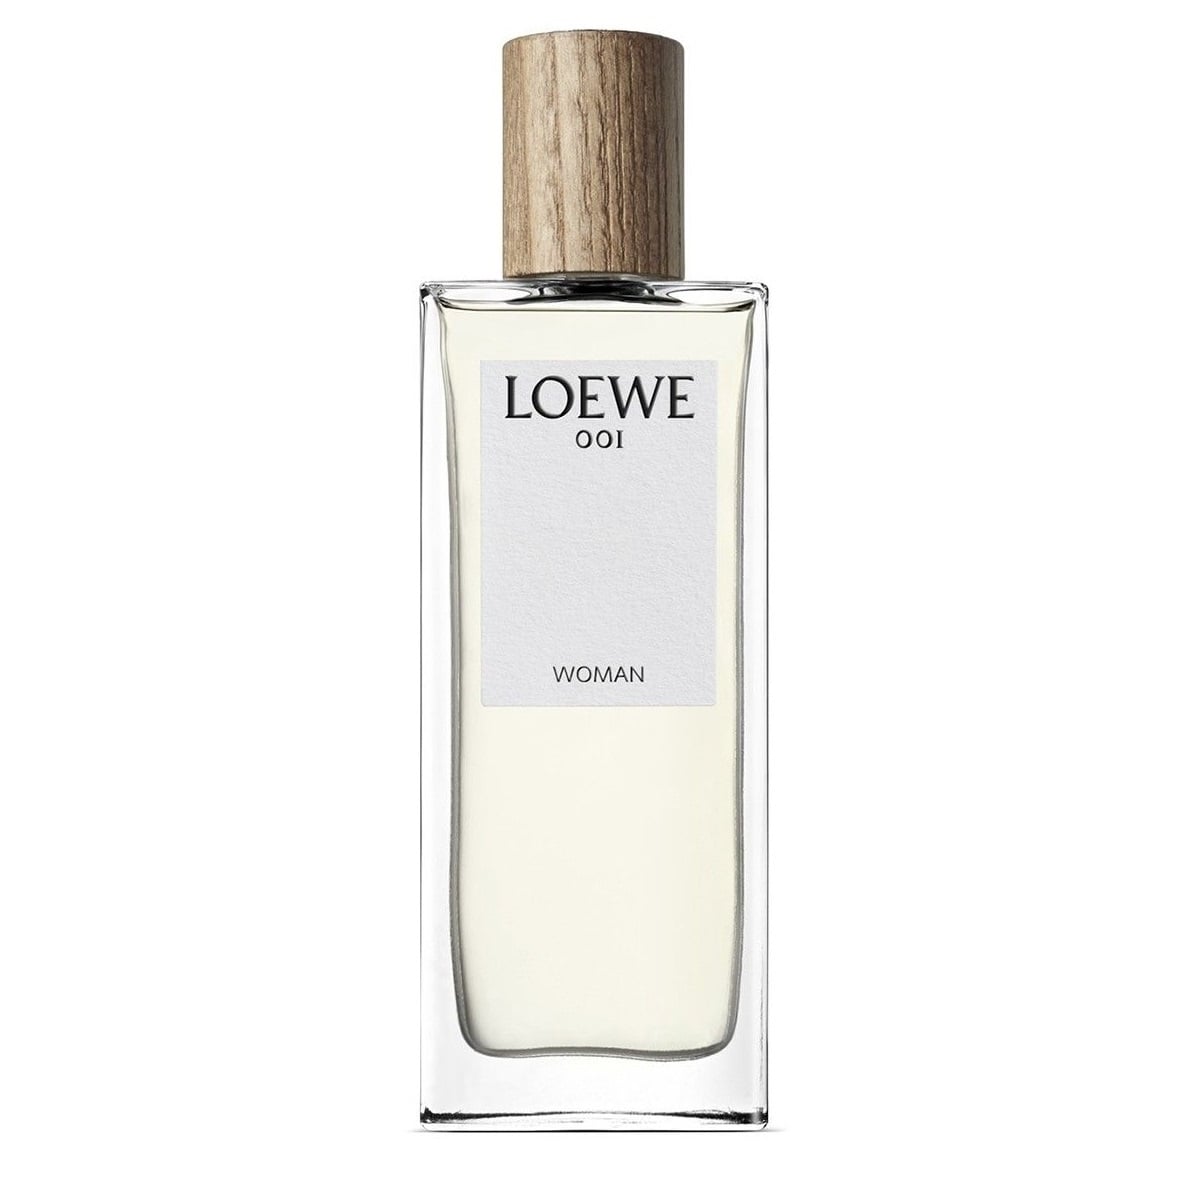 Loewe – 001 Woman(ロエベ – 001 ウーマン)